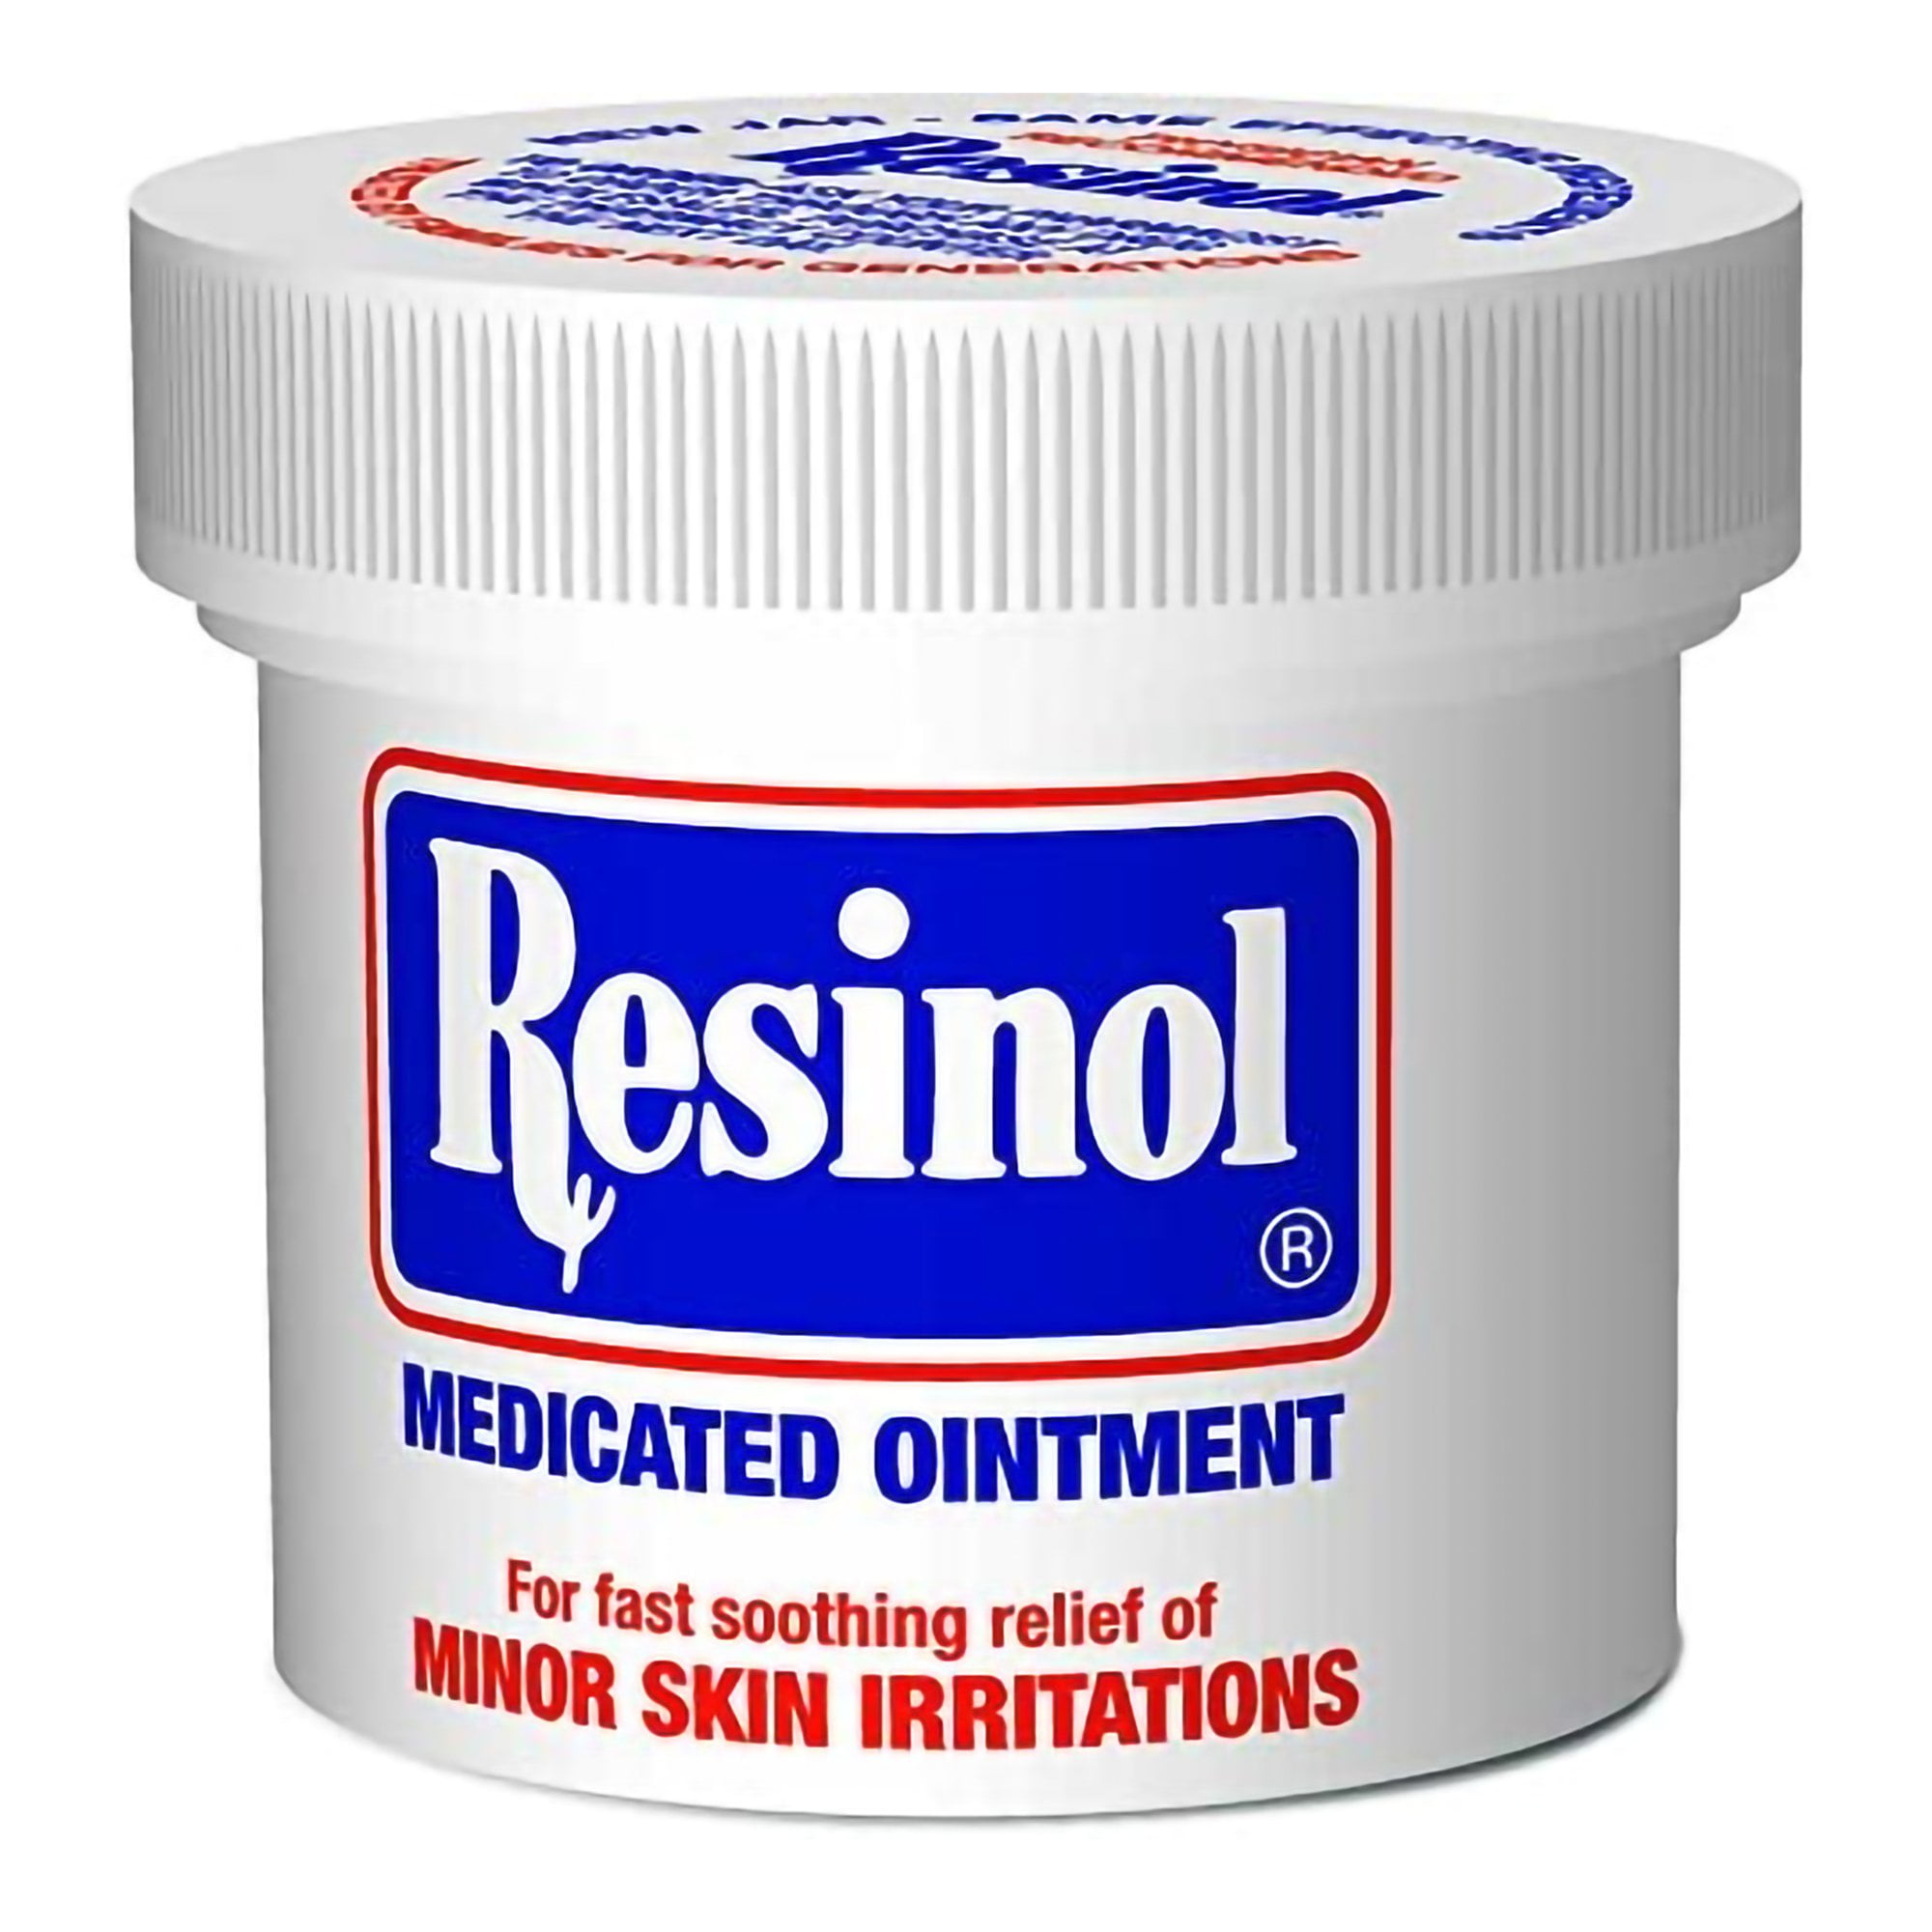 1920 Resinol Ointment and Soap Ad - Drive Away Eczema on eBid